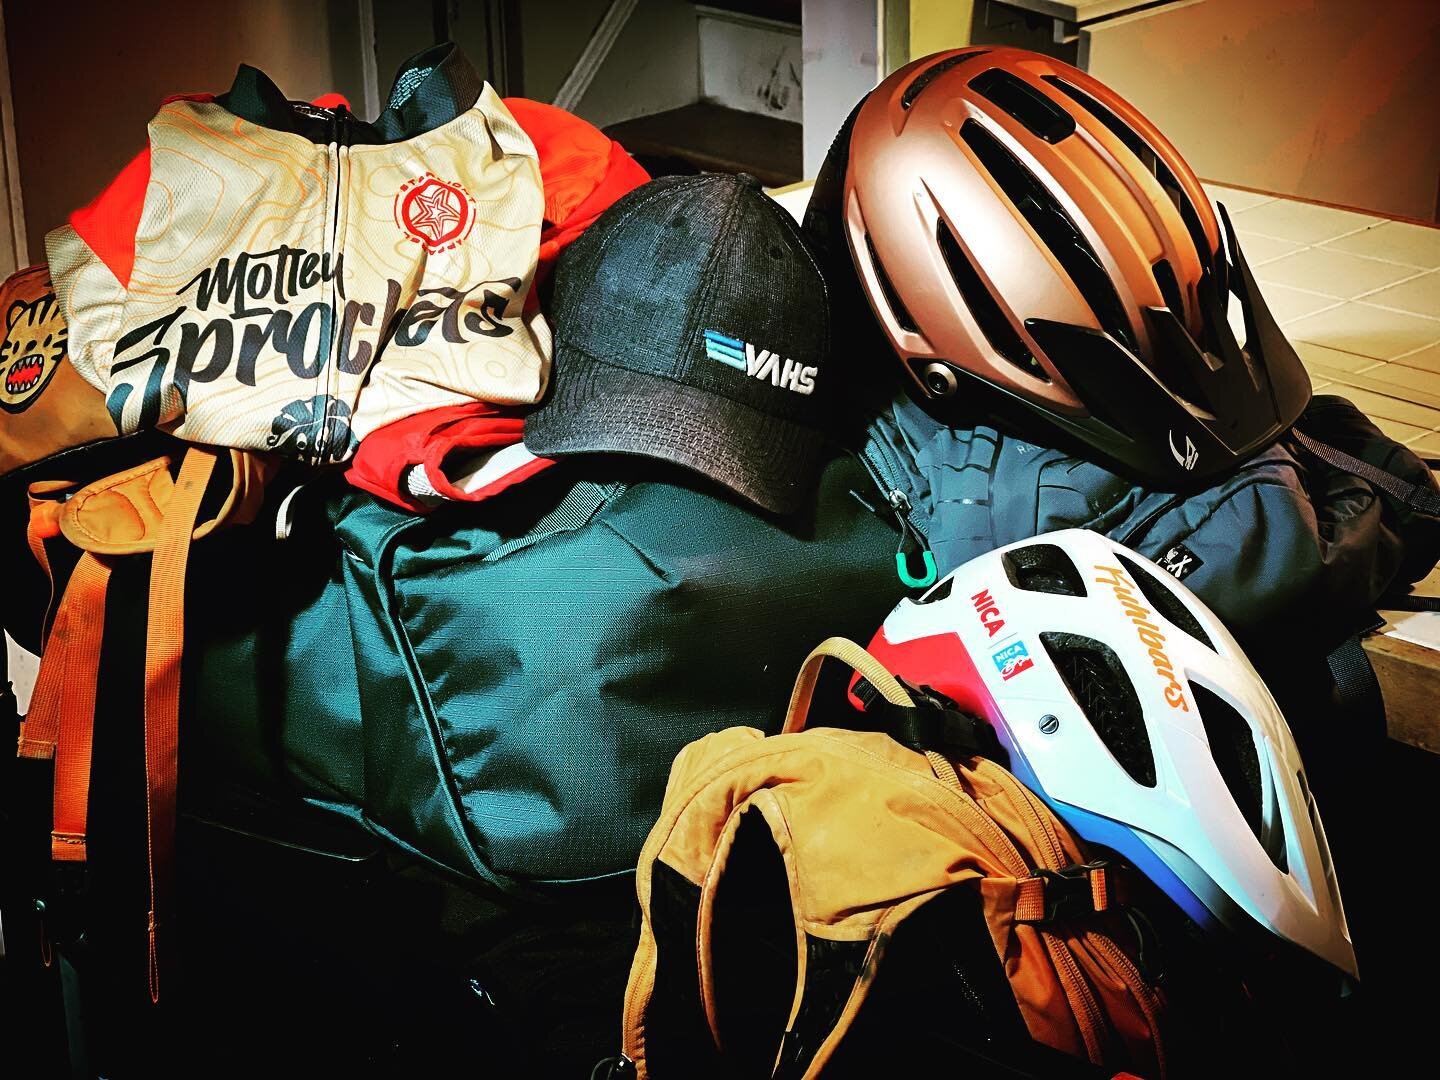 Heading out early to do it all again 😁 #motleysprockets #vahsmtb #nicava #morekidsonbikes #mountainbiking